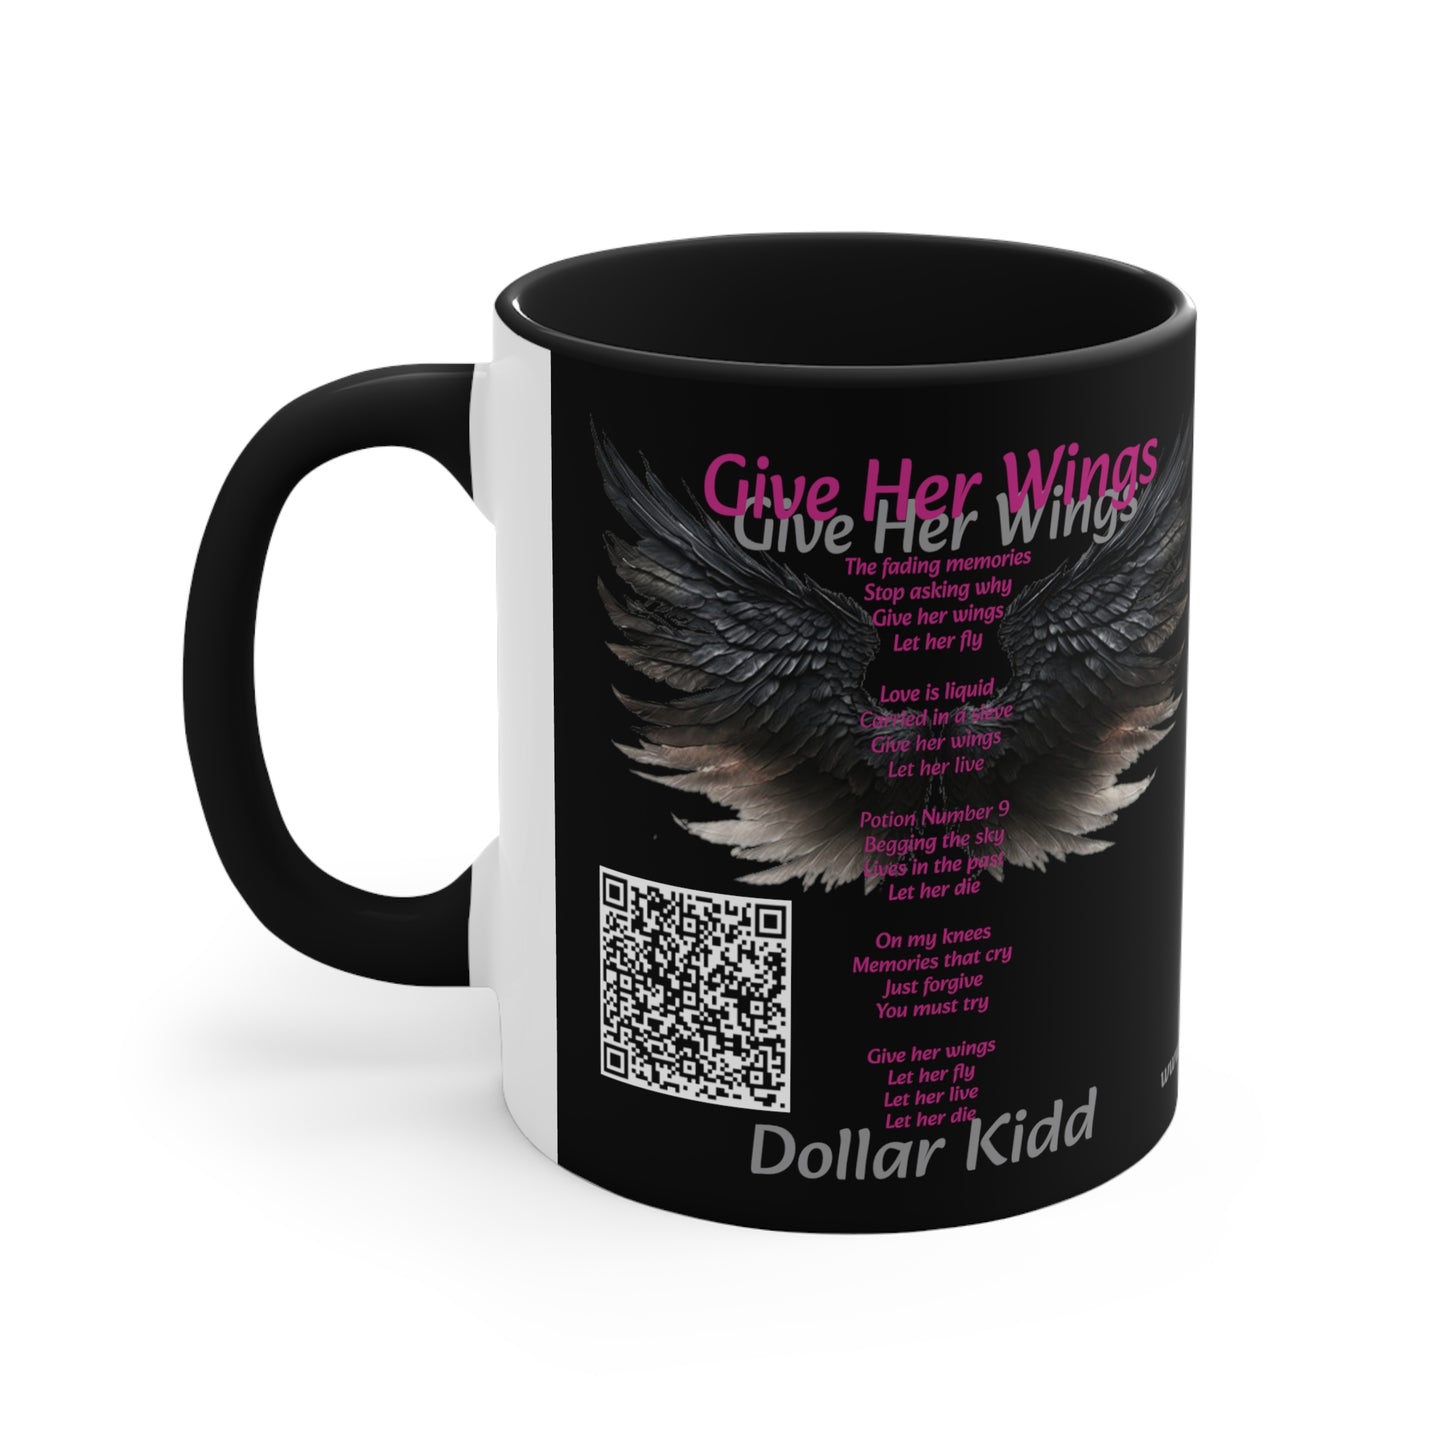 Dollar Kidd - Give Her Wings Accent Coffee Mug, 11oz